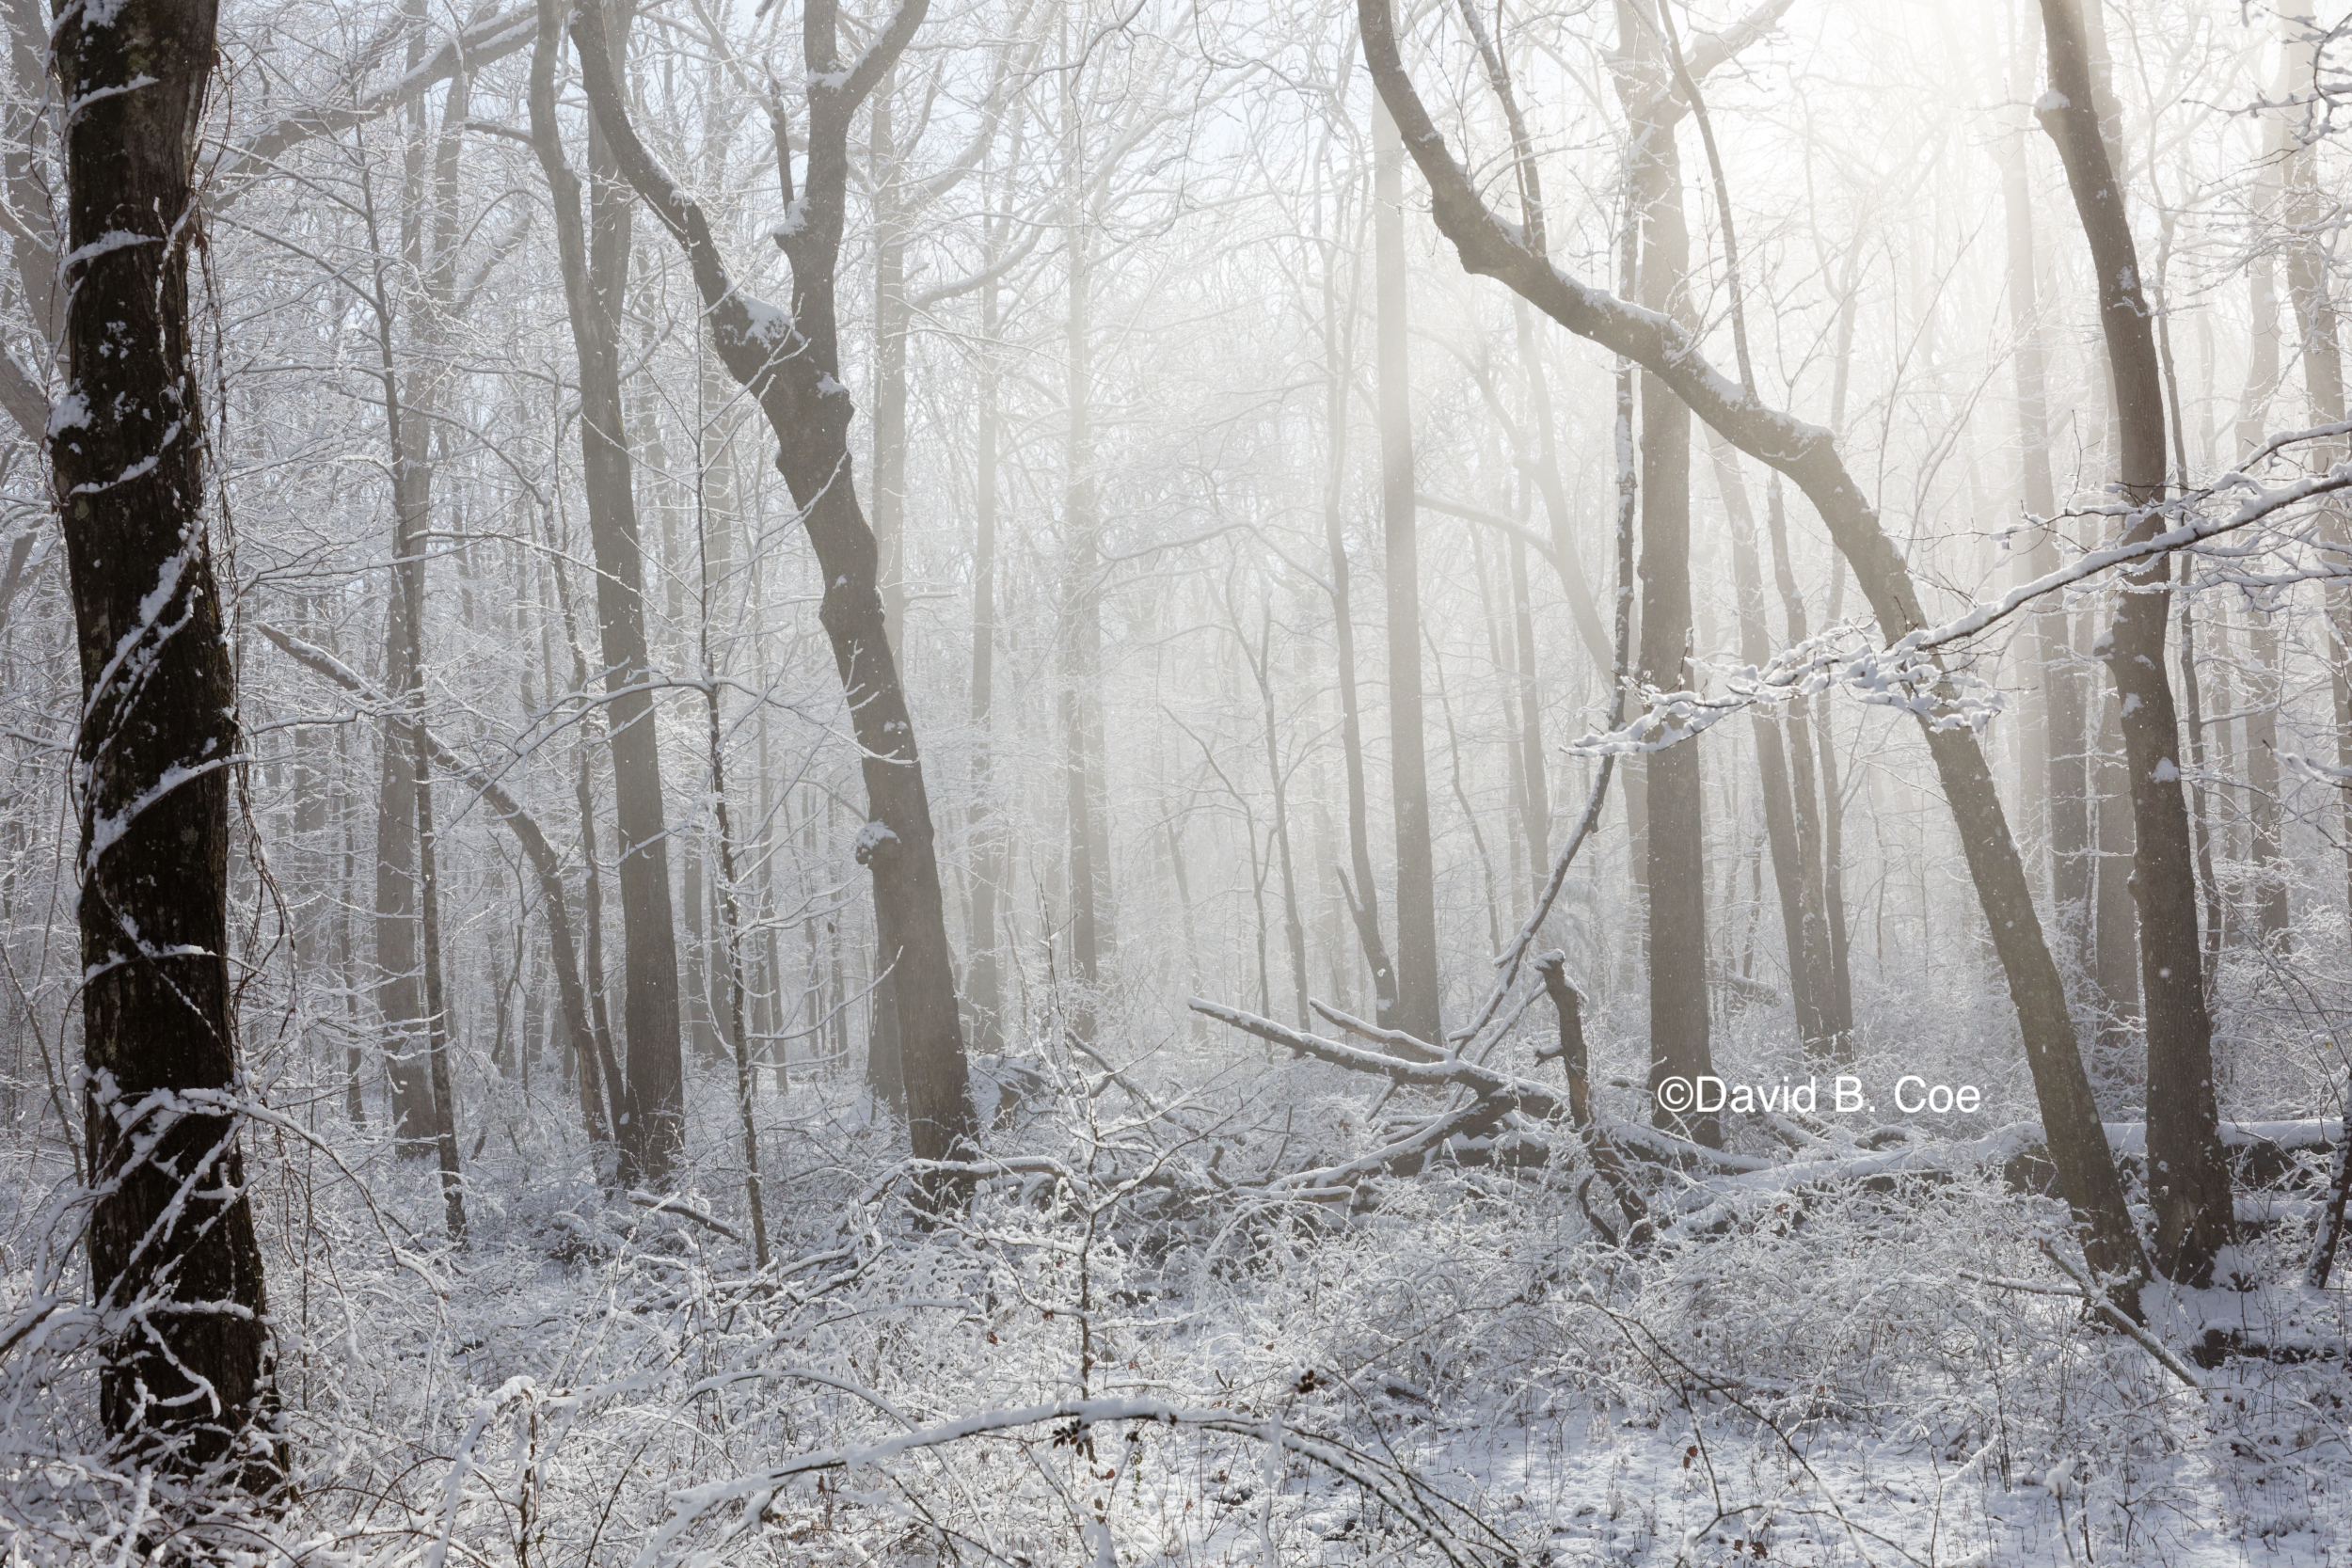 Snow and Mist II, by David B. Coe